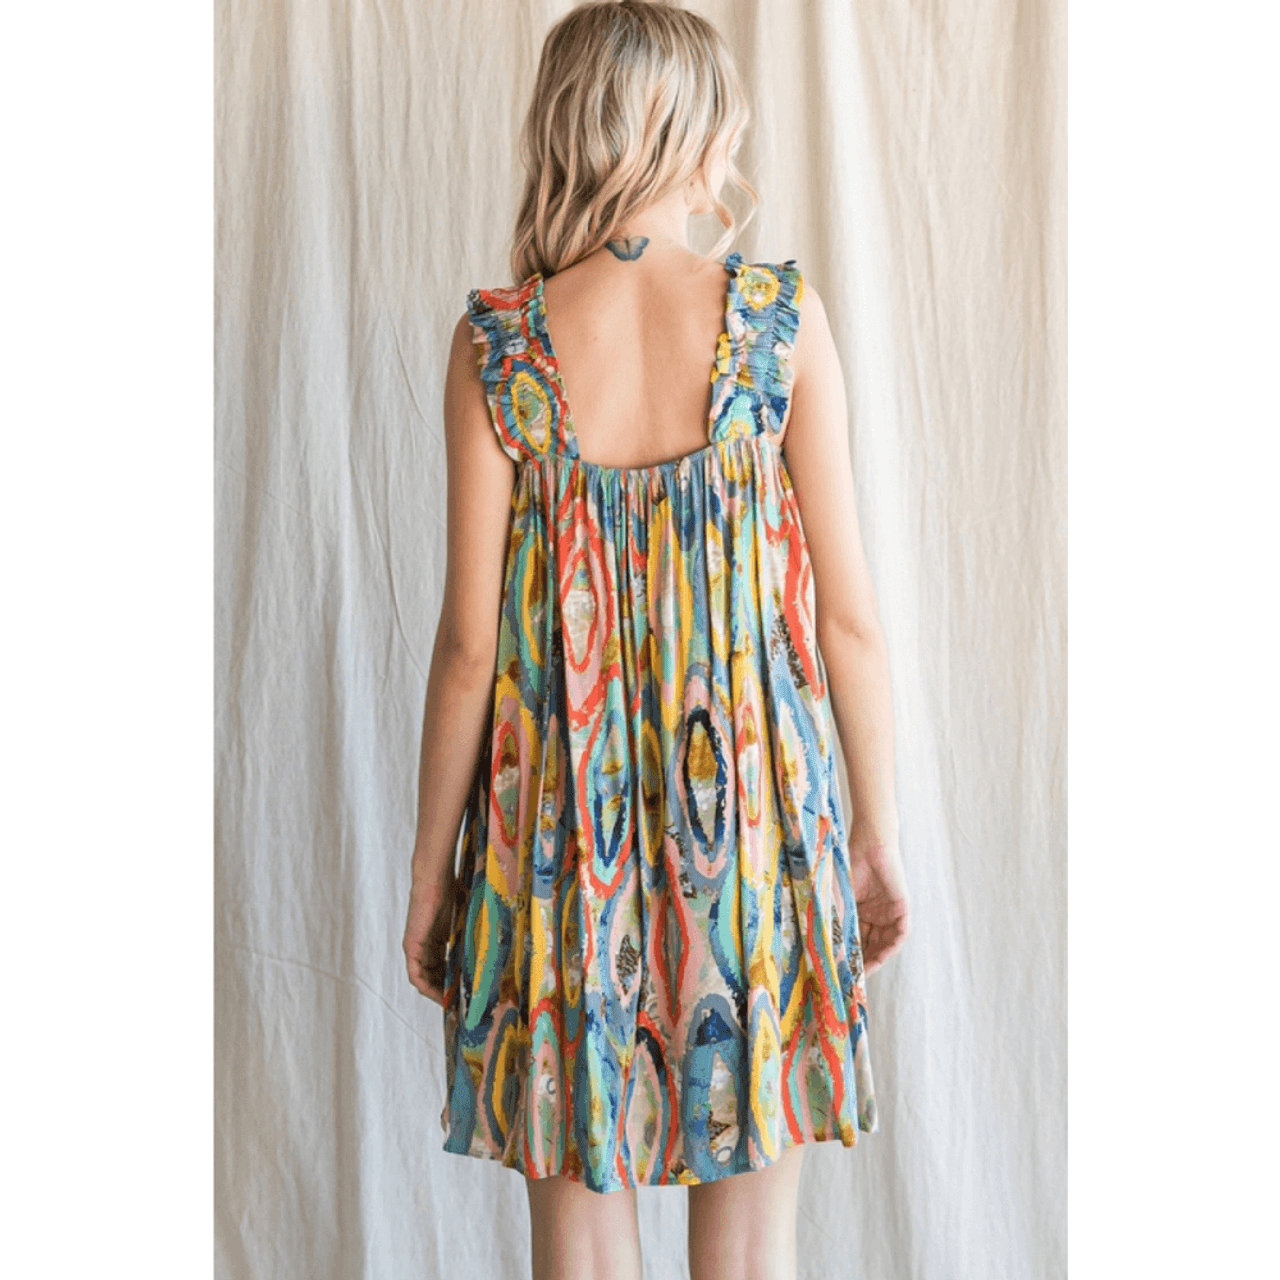 Jodifl Mint Print Swing Dress Ruffle Shoulders